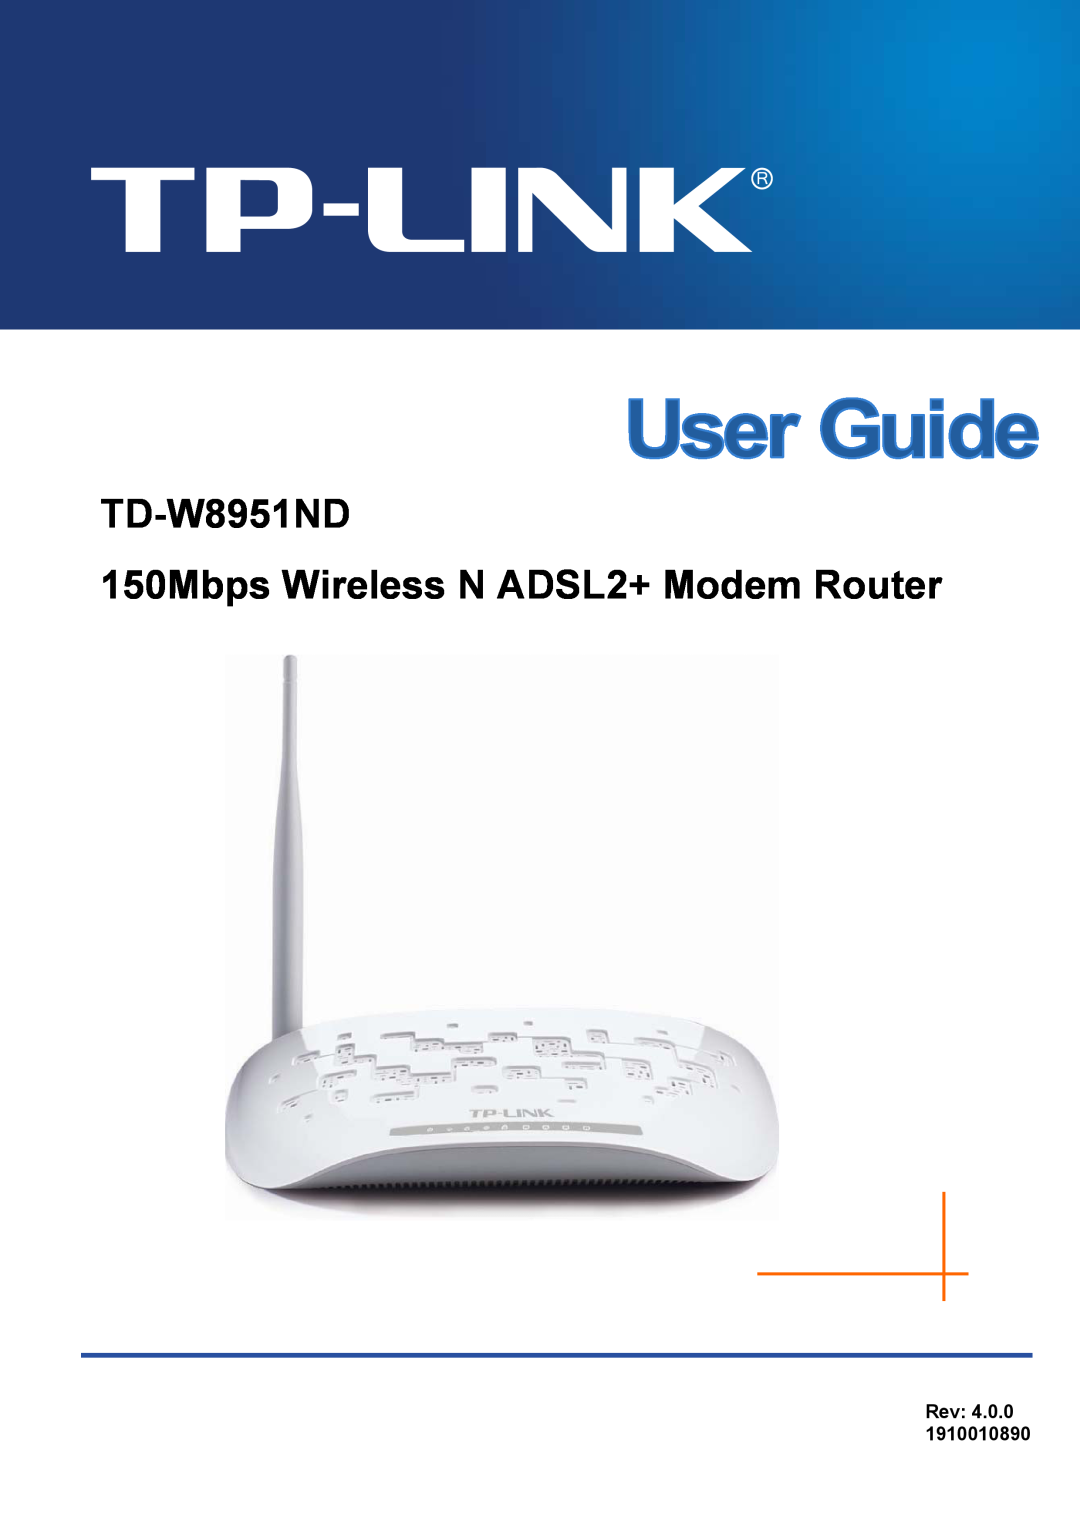 TP-Link td-w8951nd manual TD-W8951ND 150Mbps Wireless N ADSL2+ Modem Router, Rev 4.0.0 